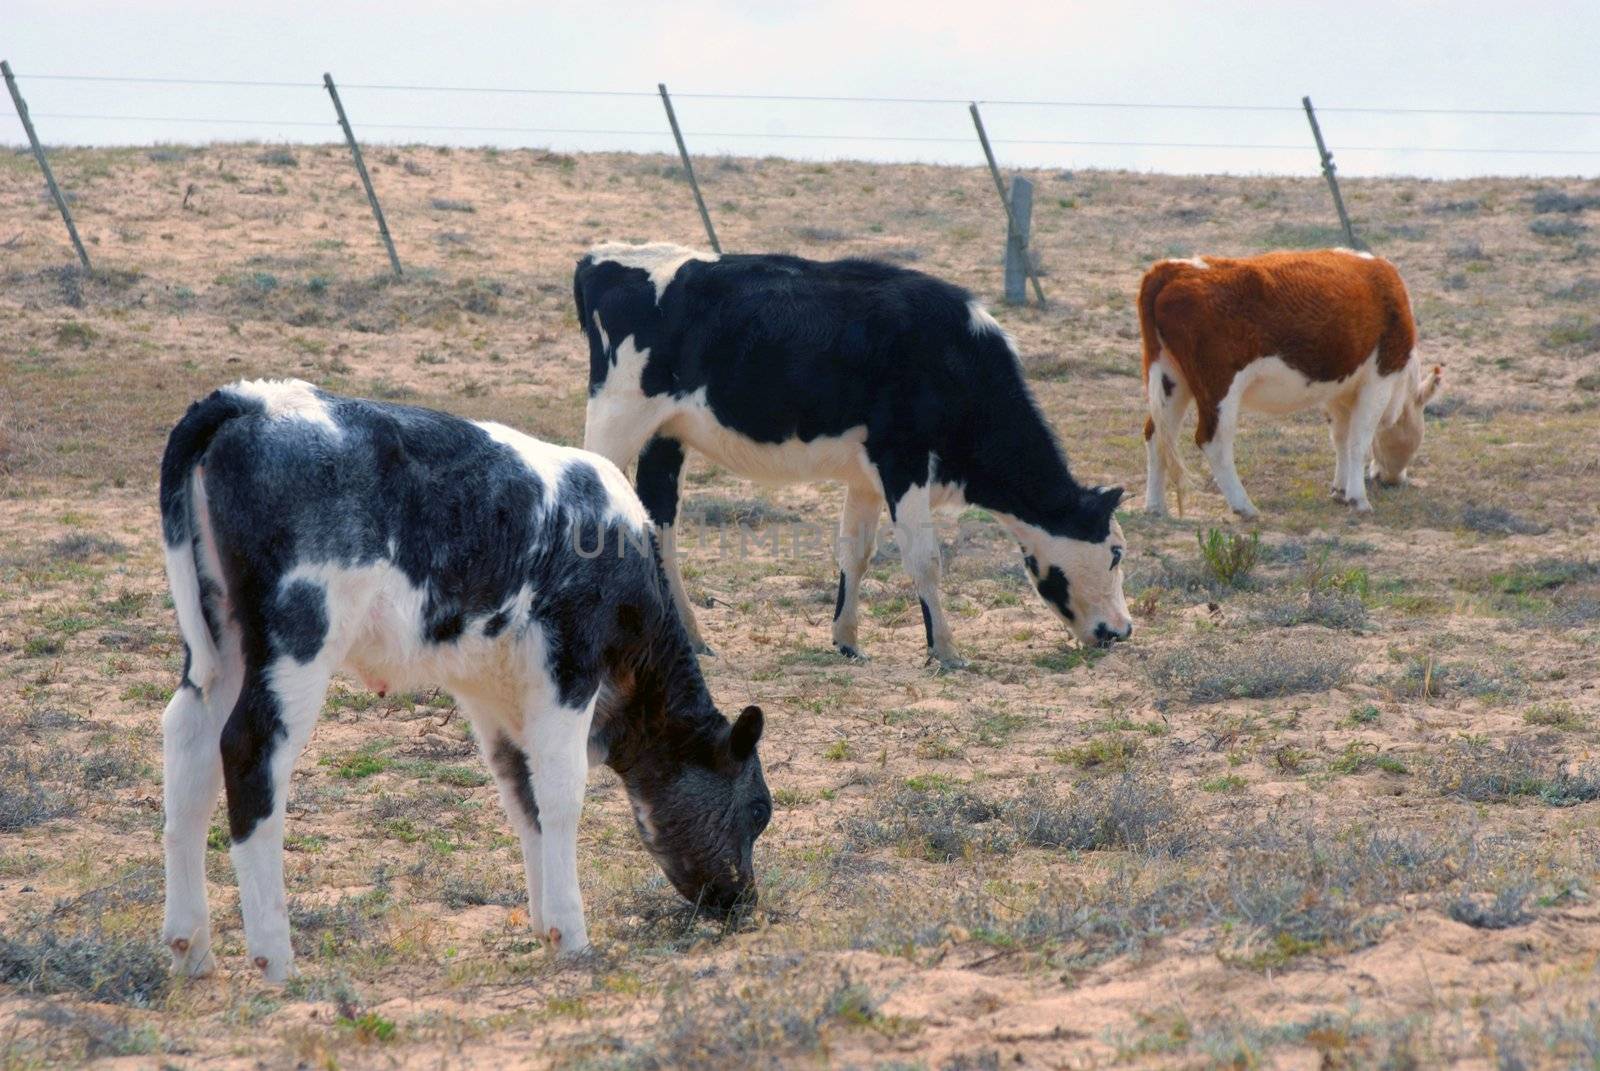 Three calves grazing near a fence